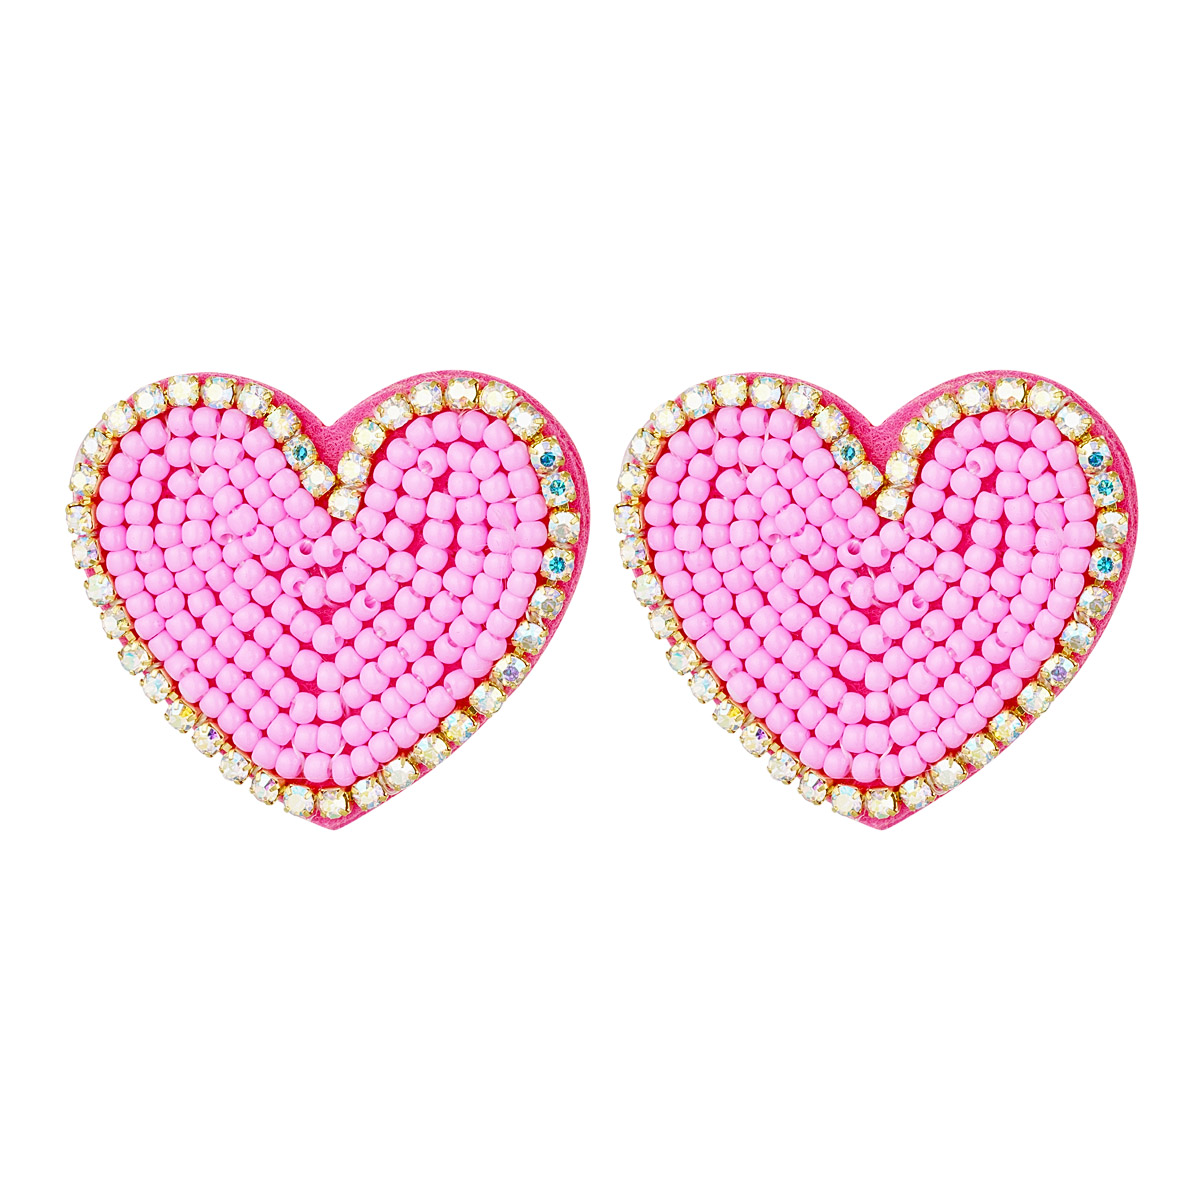 Beaded earrings heart with rhinestones